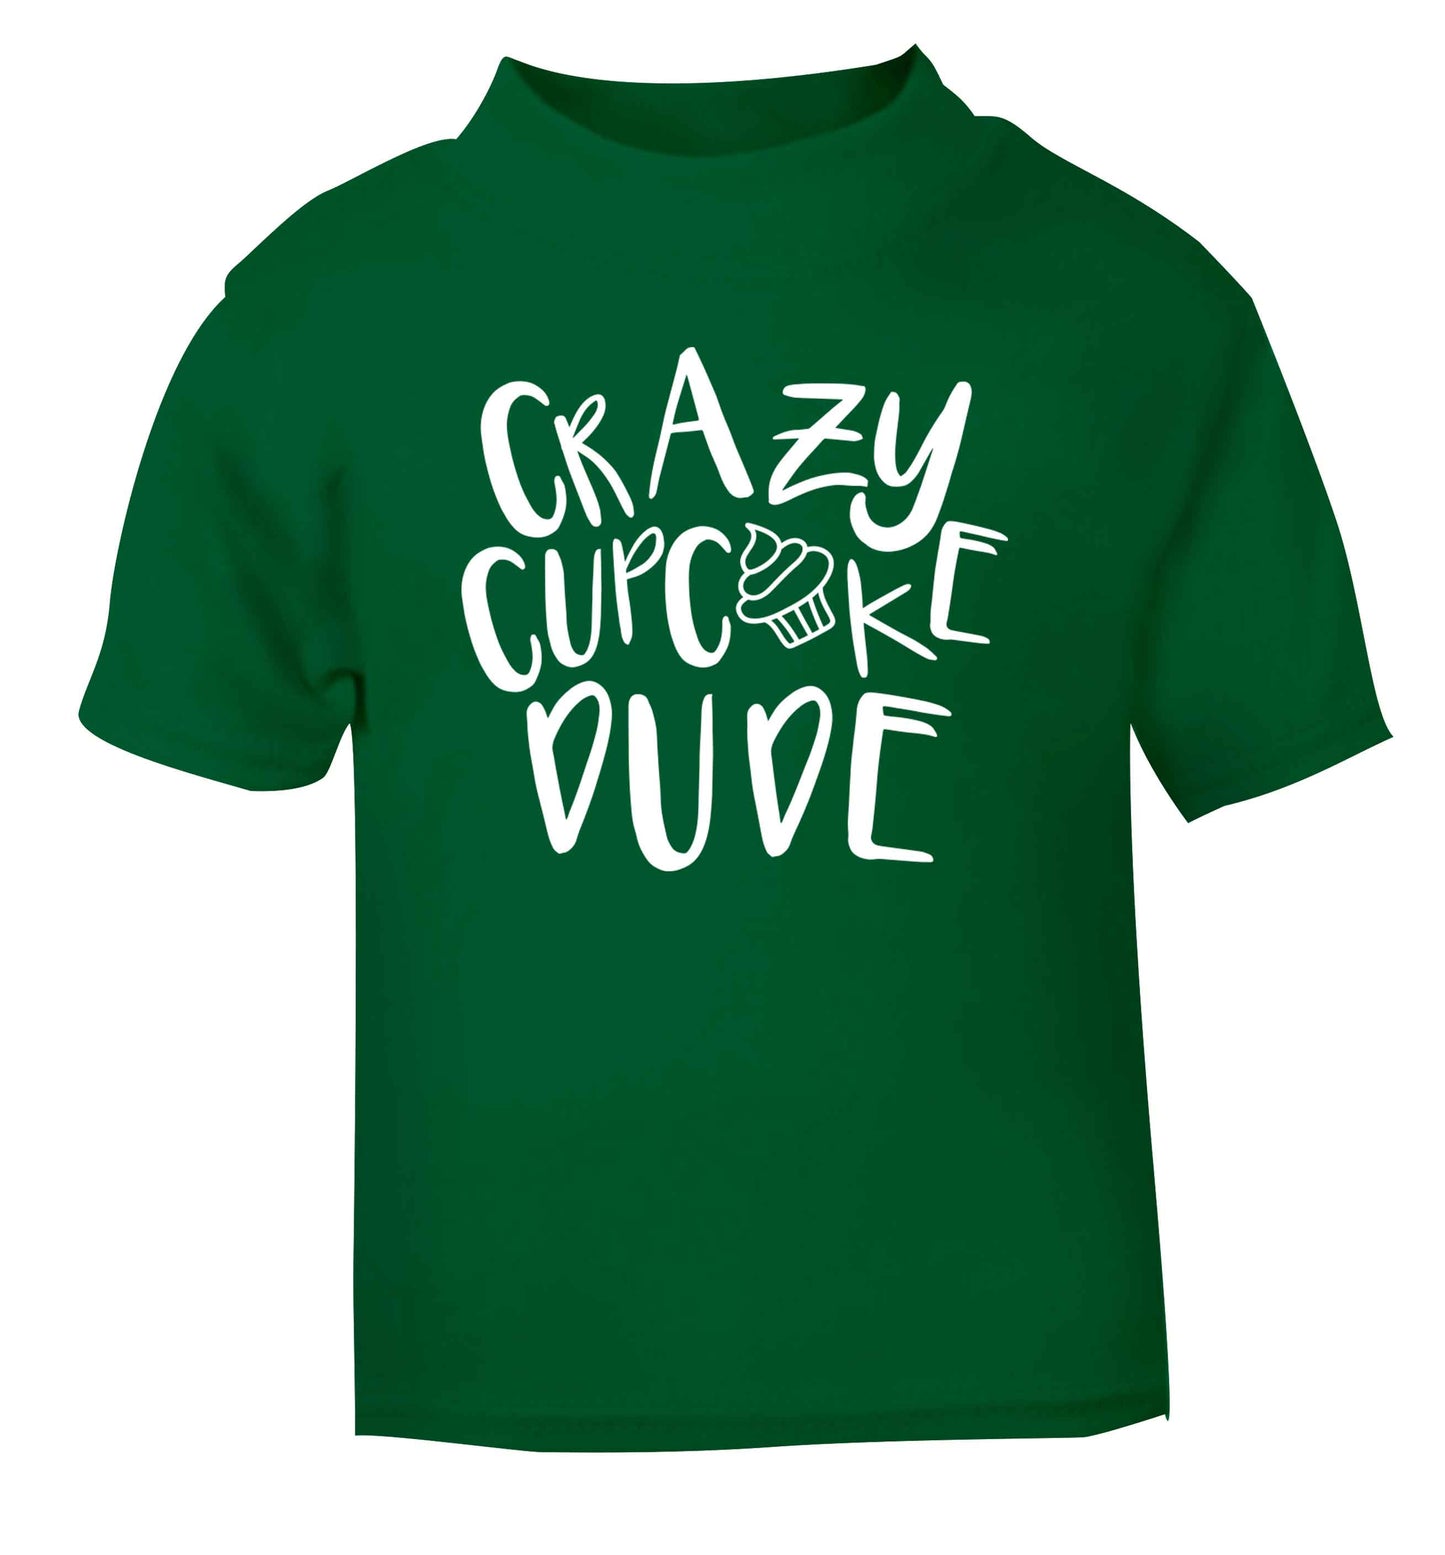 Crazy cupcake dude green Baby Toddler Tshirt 2 Years